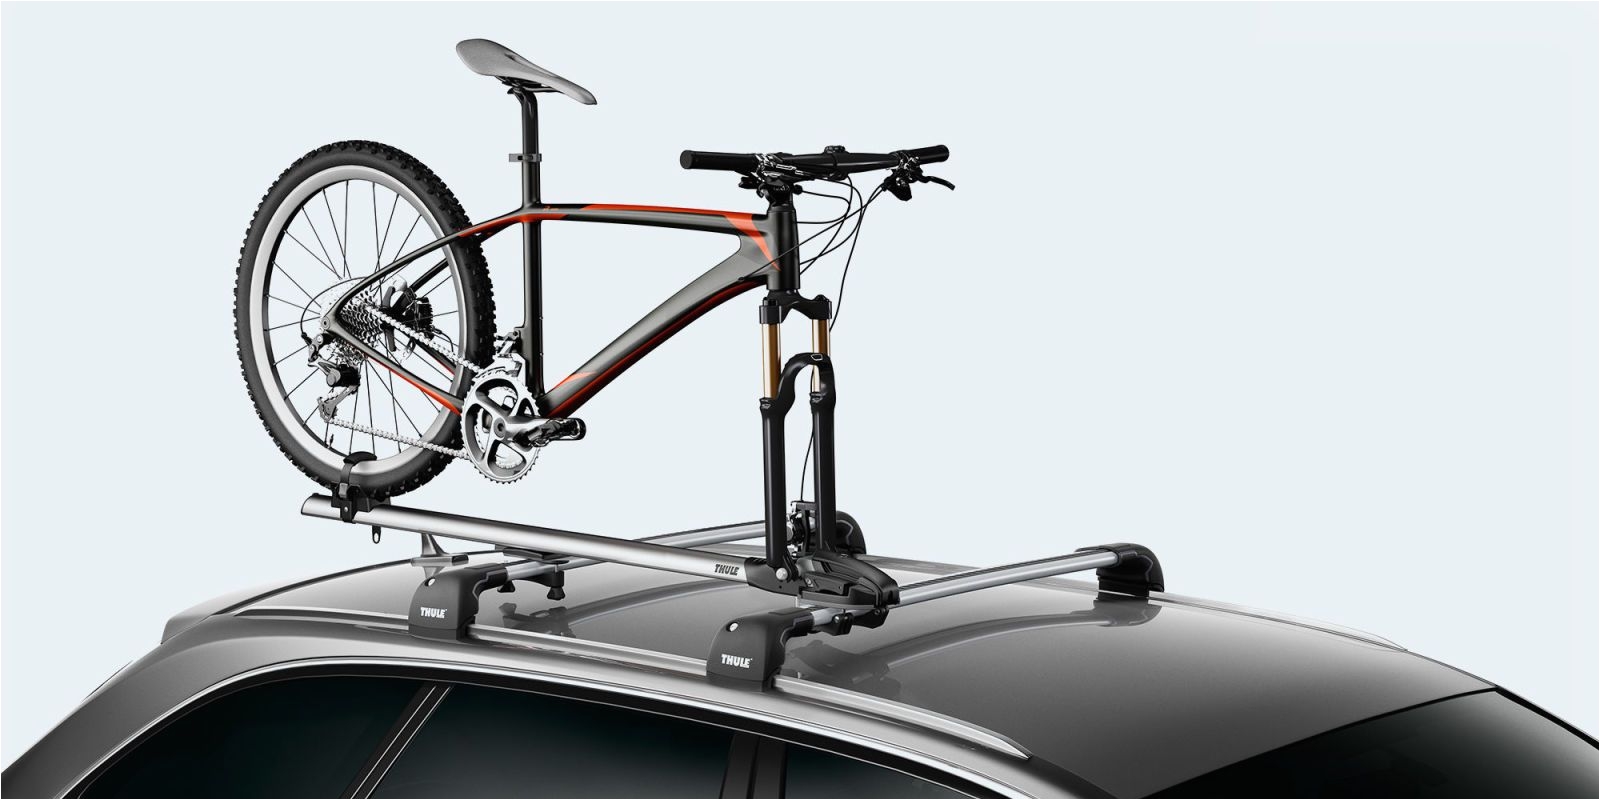 Honda Crv Bike Rack 2014 top 5 Best Bike Rack for Suv Reviews and Guide Stuff to Buy